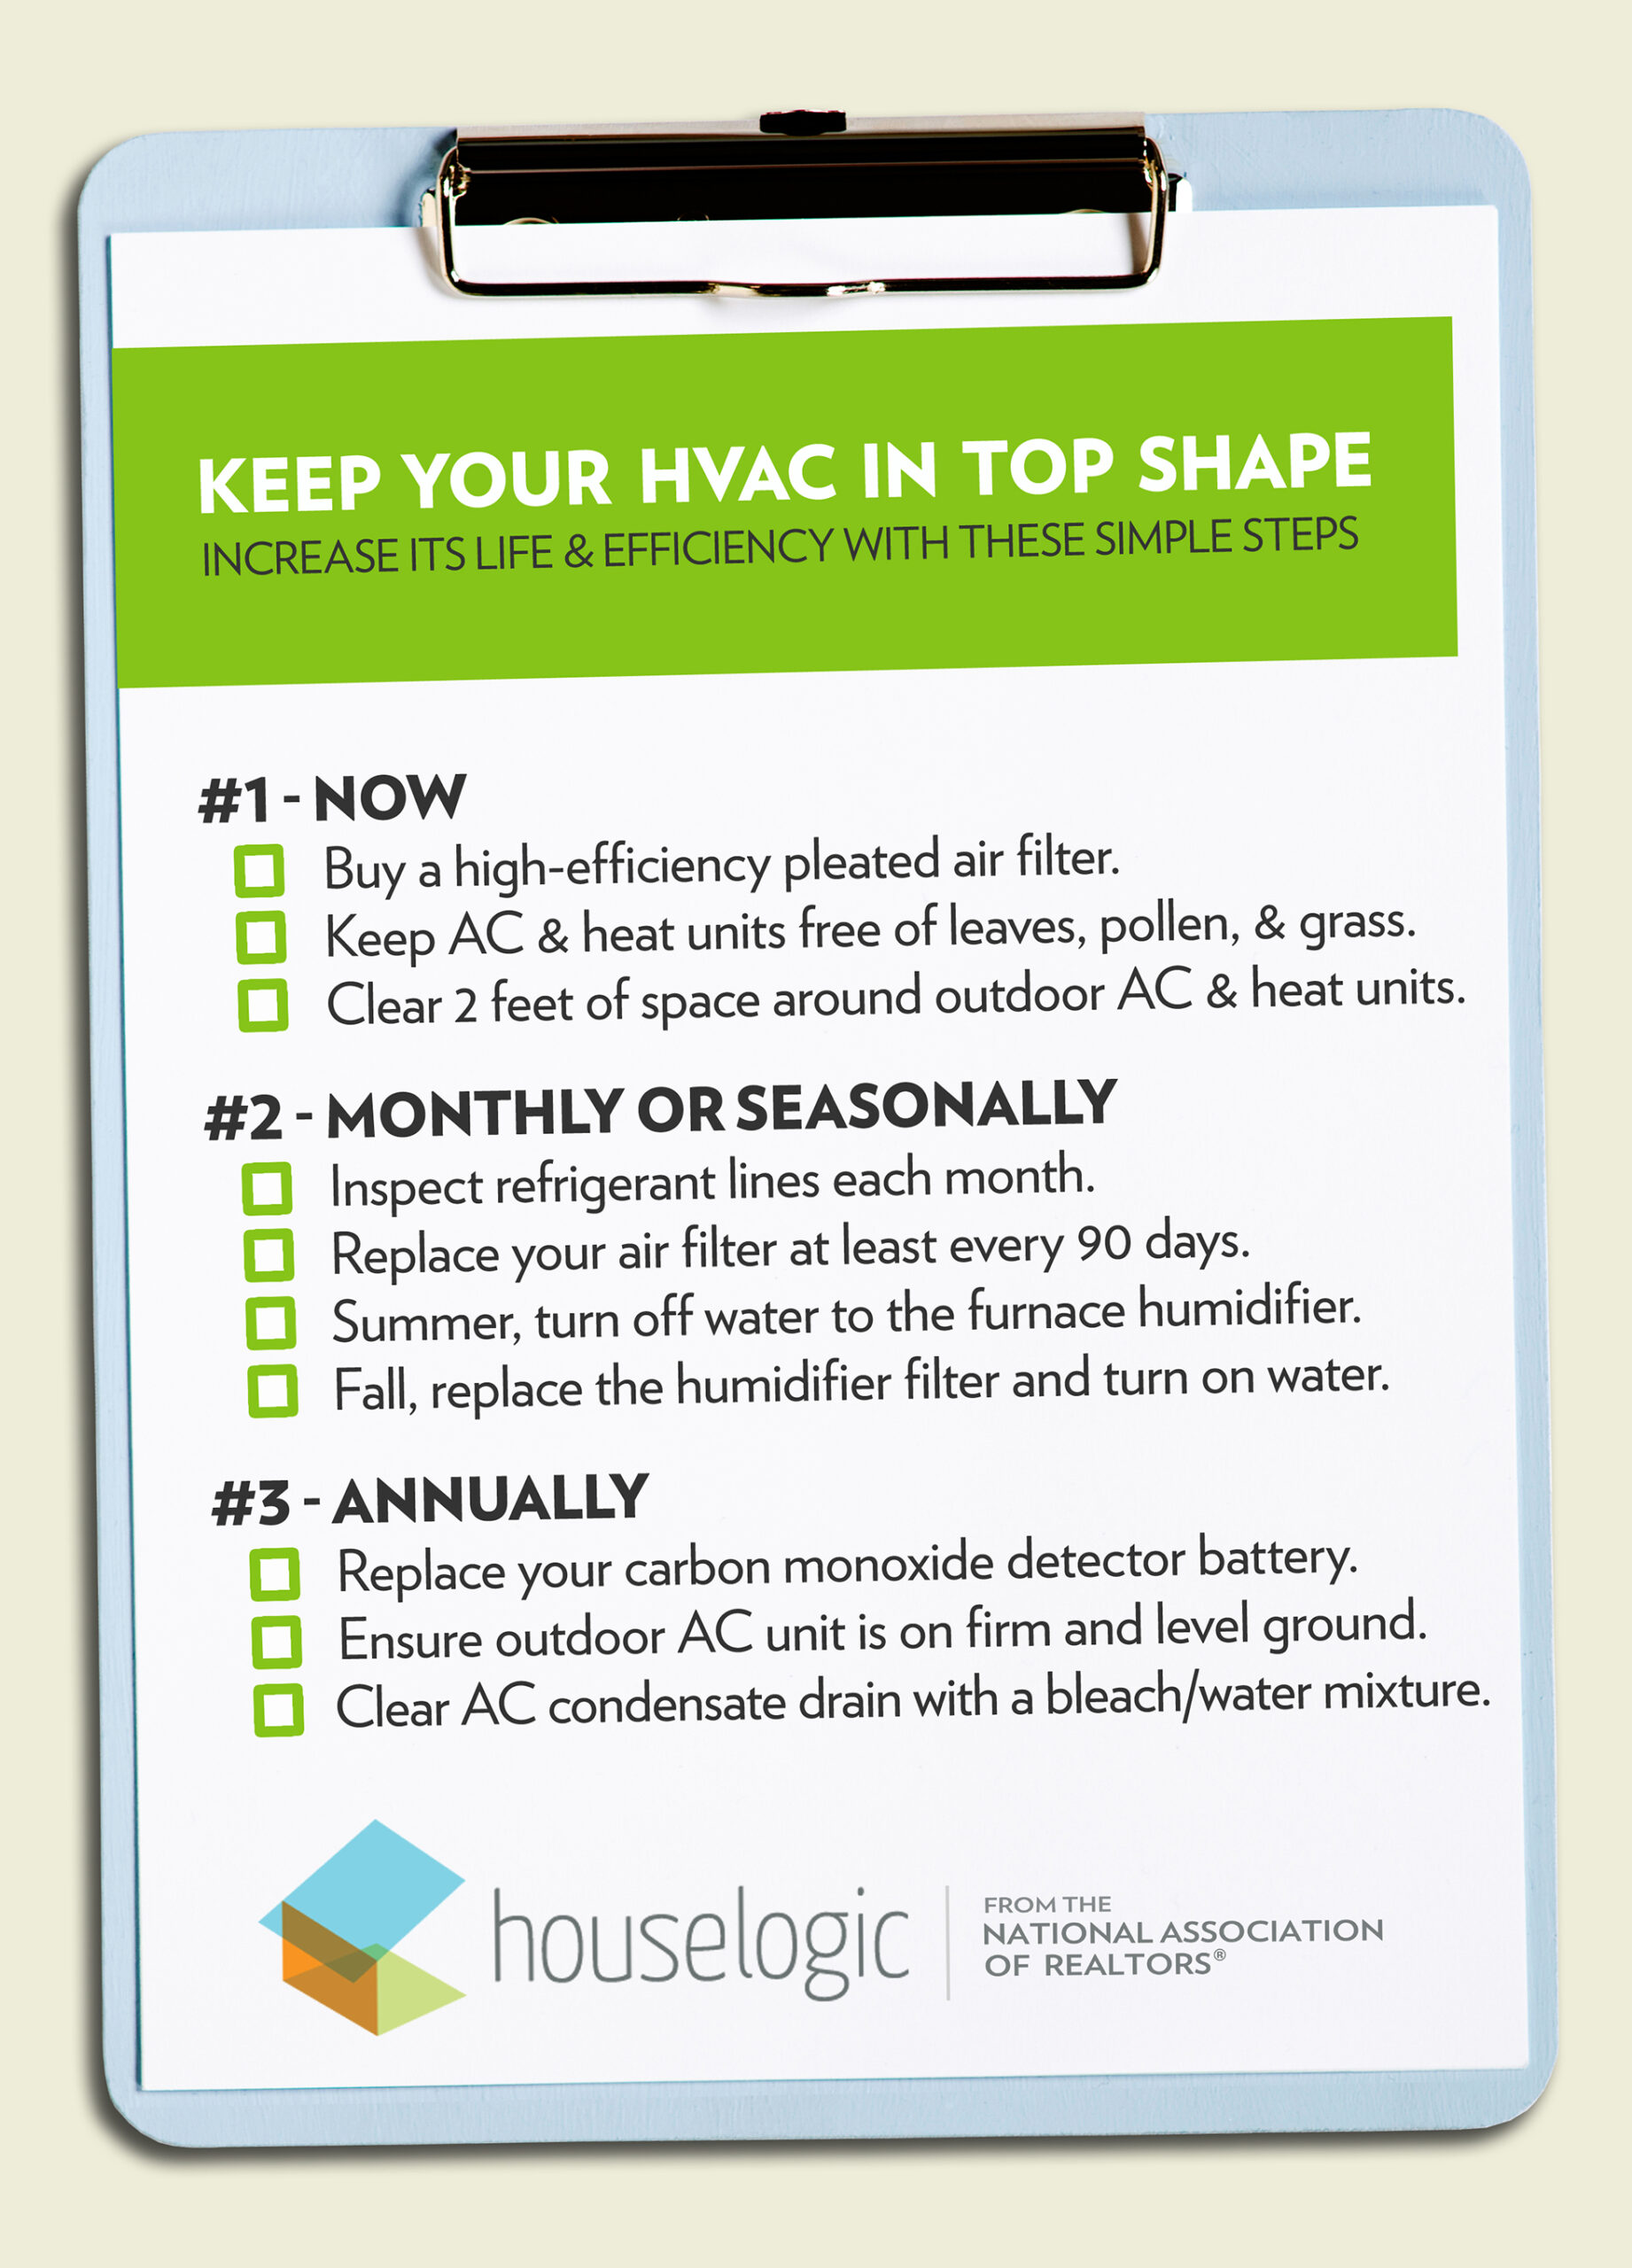 Essential Preventive Maintenance Tips for HVAC Systems